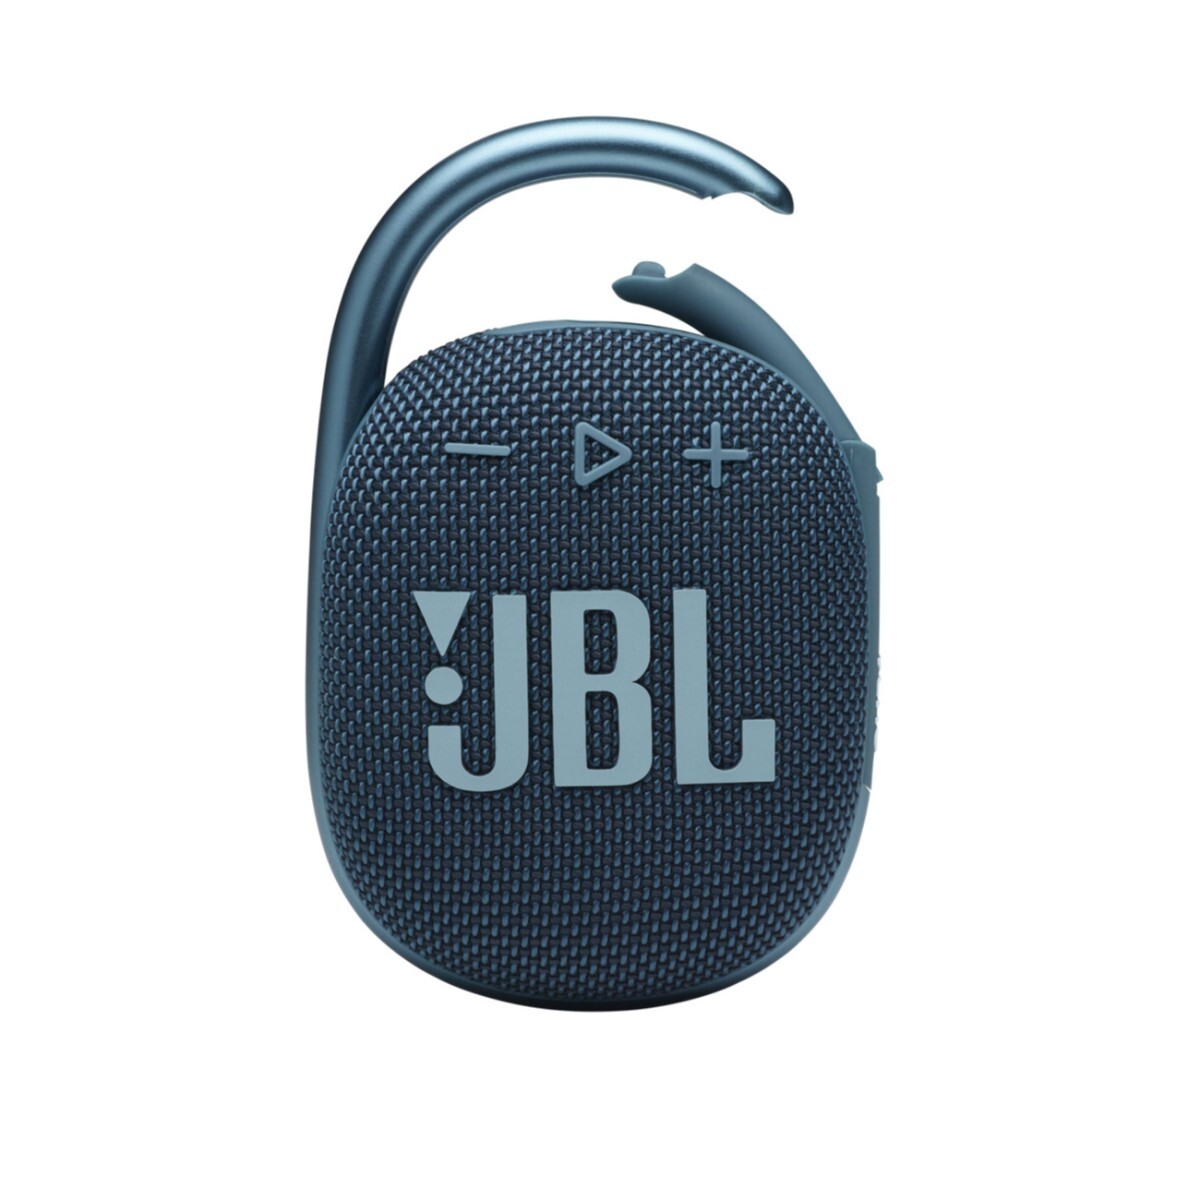 Jbl clip 4 parlante portátil waterproof - Azul 